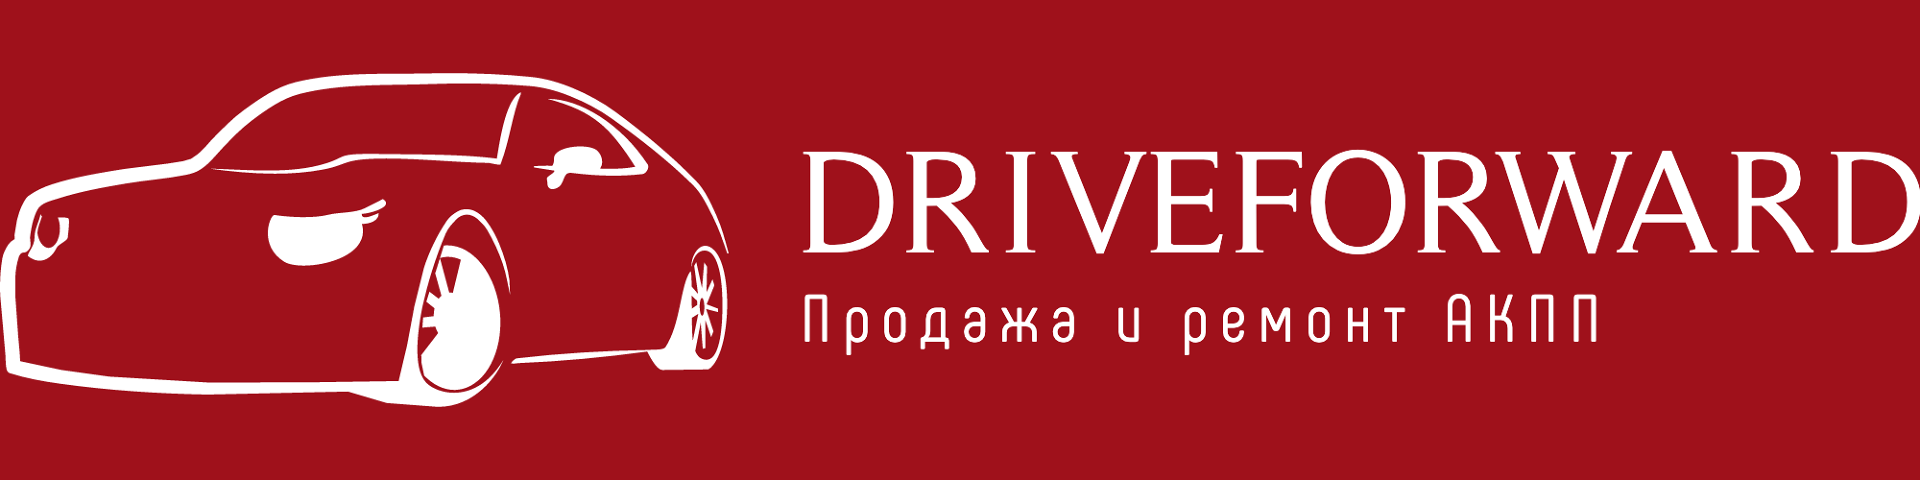 driveforward